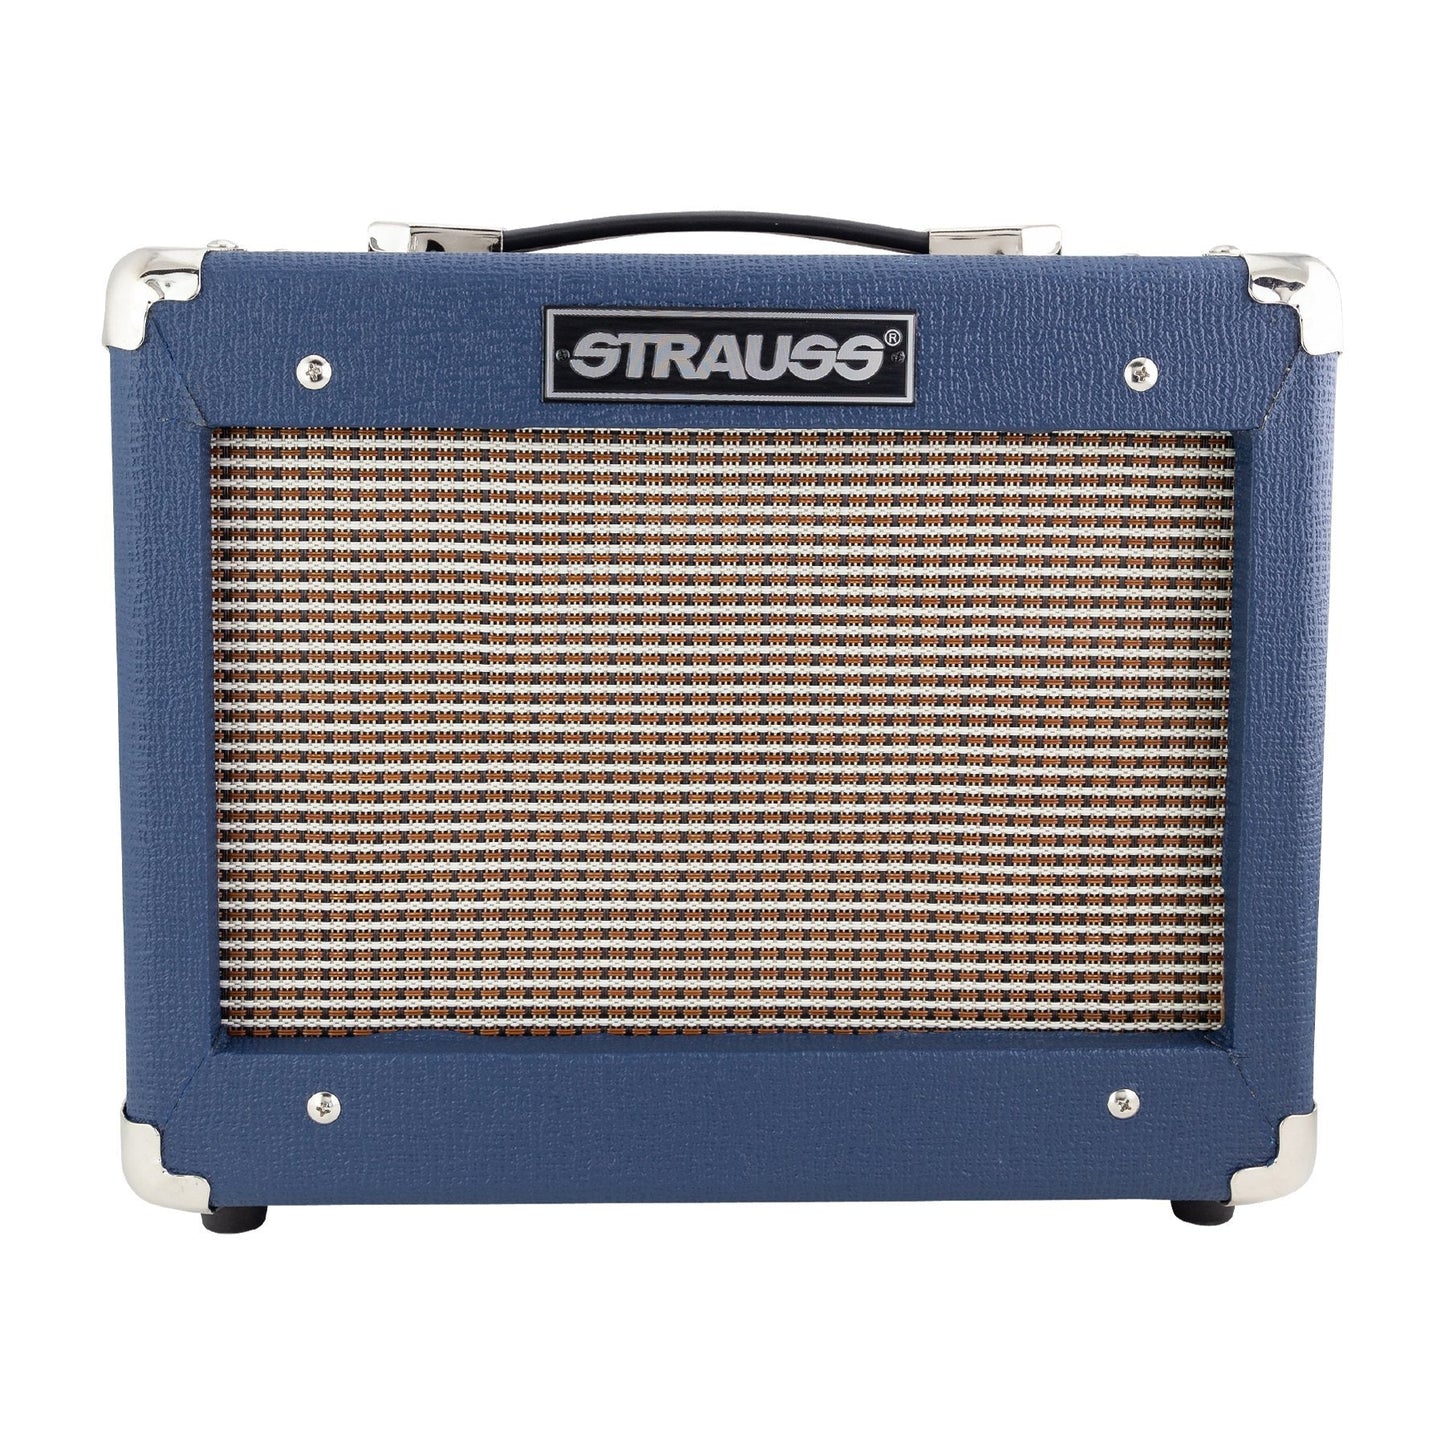 Strauss 'Legacy' 15 Watt Solid State Guitar Practice Amplifier (Blue)